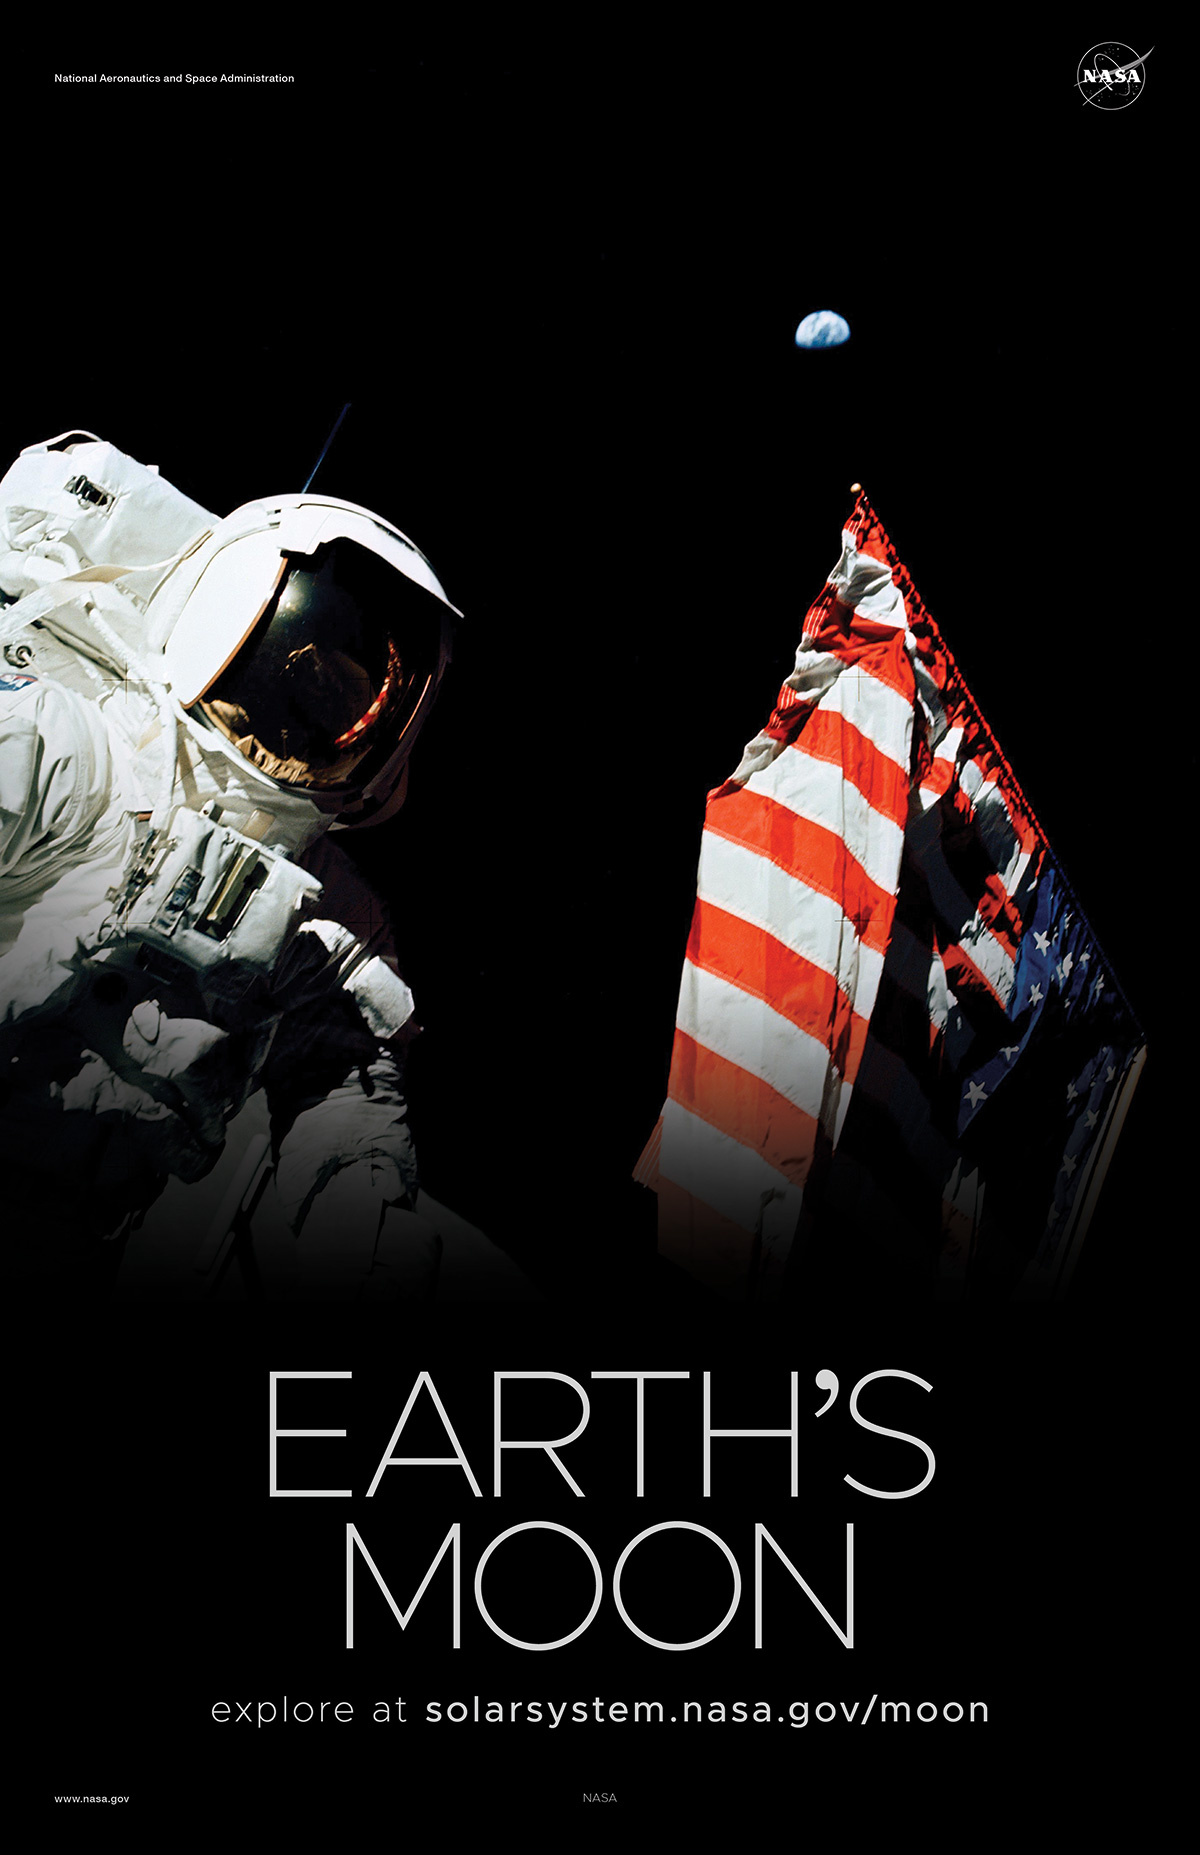 astronaut with flag on the moon